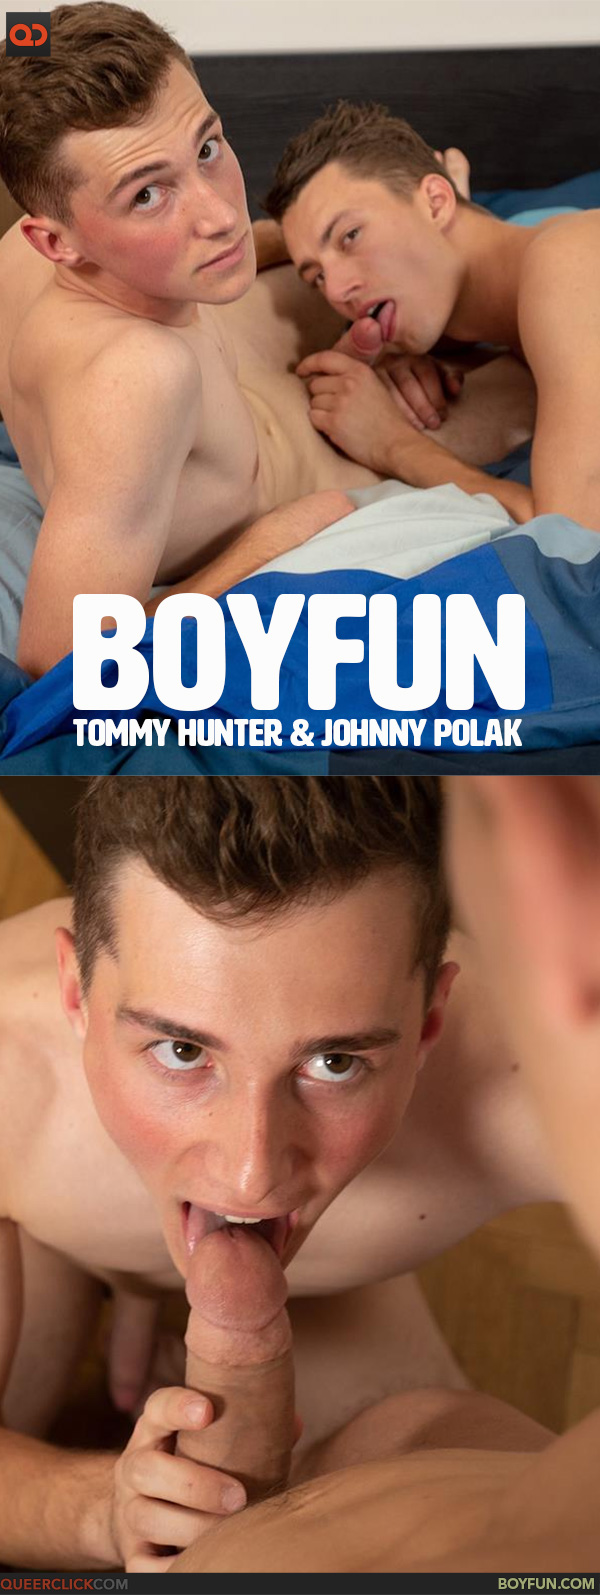 BoyFun: Tommy Hunter & Johnny Polak